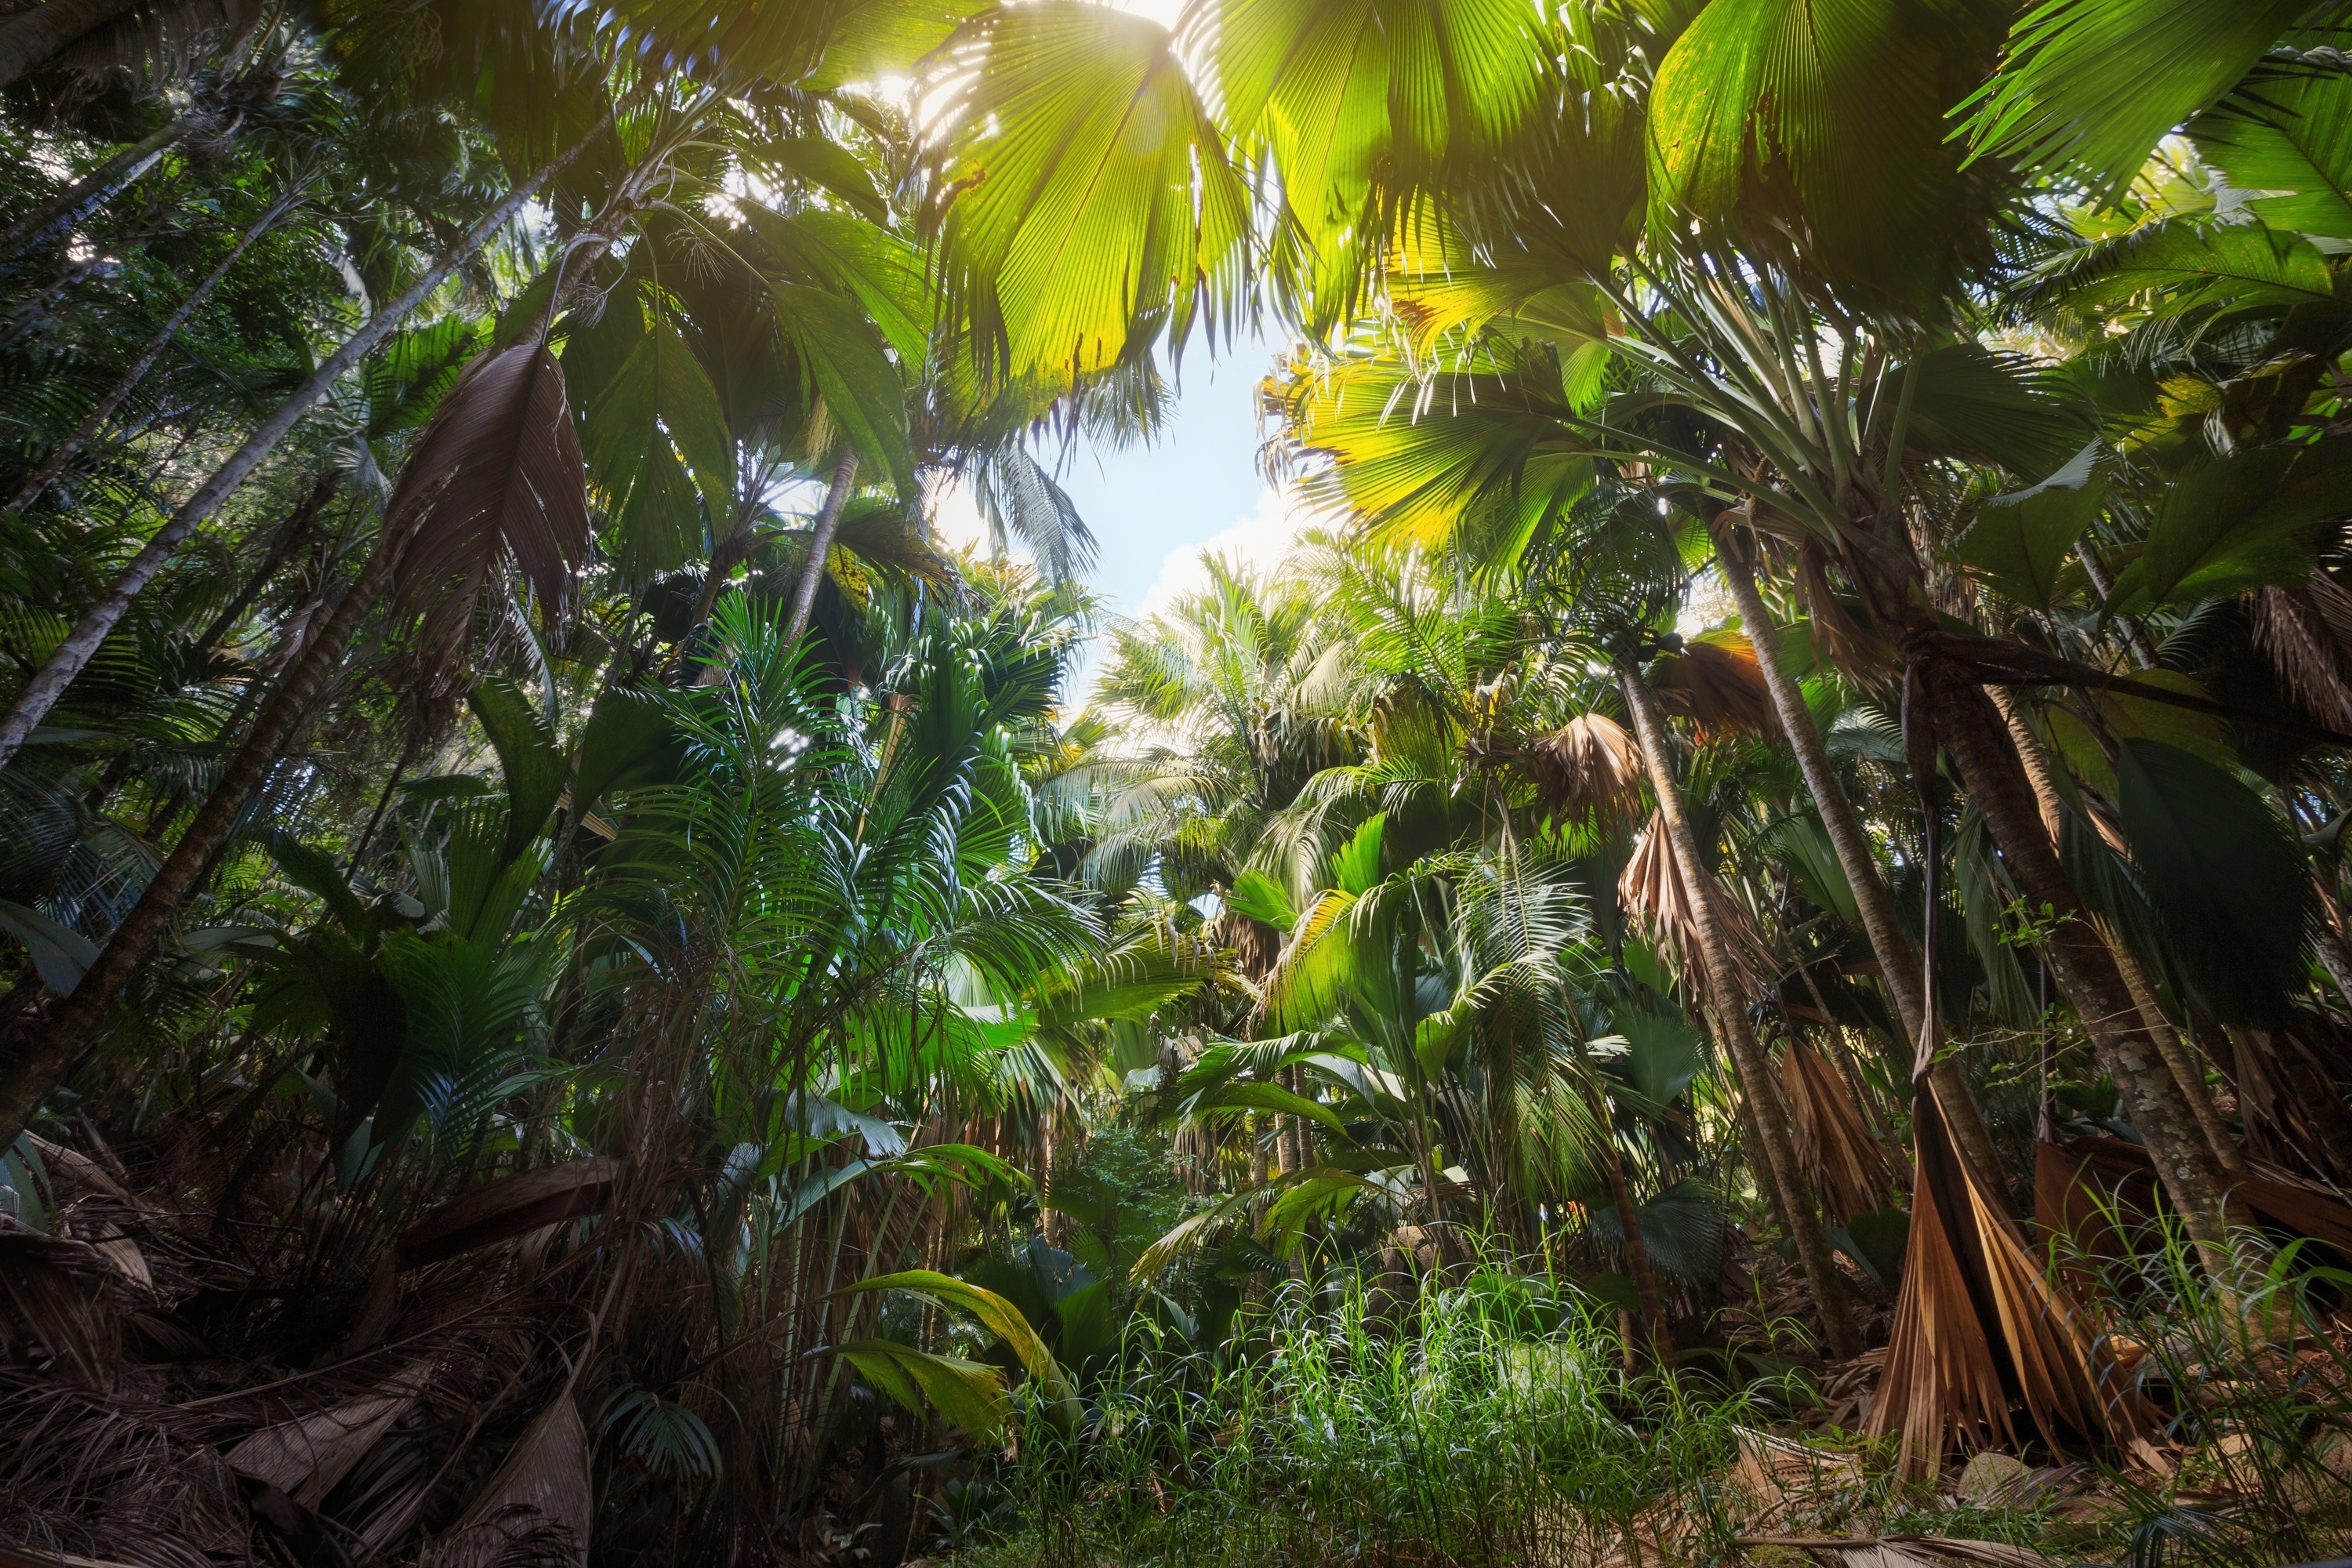 840874 descargar imagen jungla, tierra/naturaleza, naturaleza, palmera, árbol: fondos de pantalla y protectores de pantalla gratis